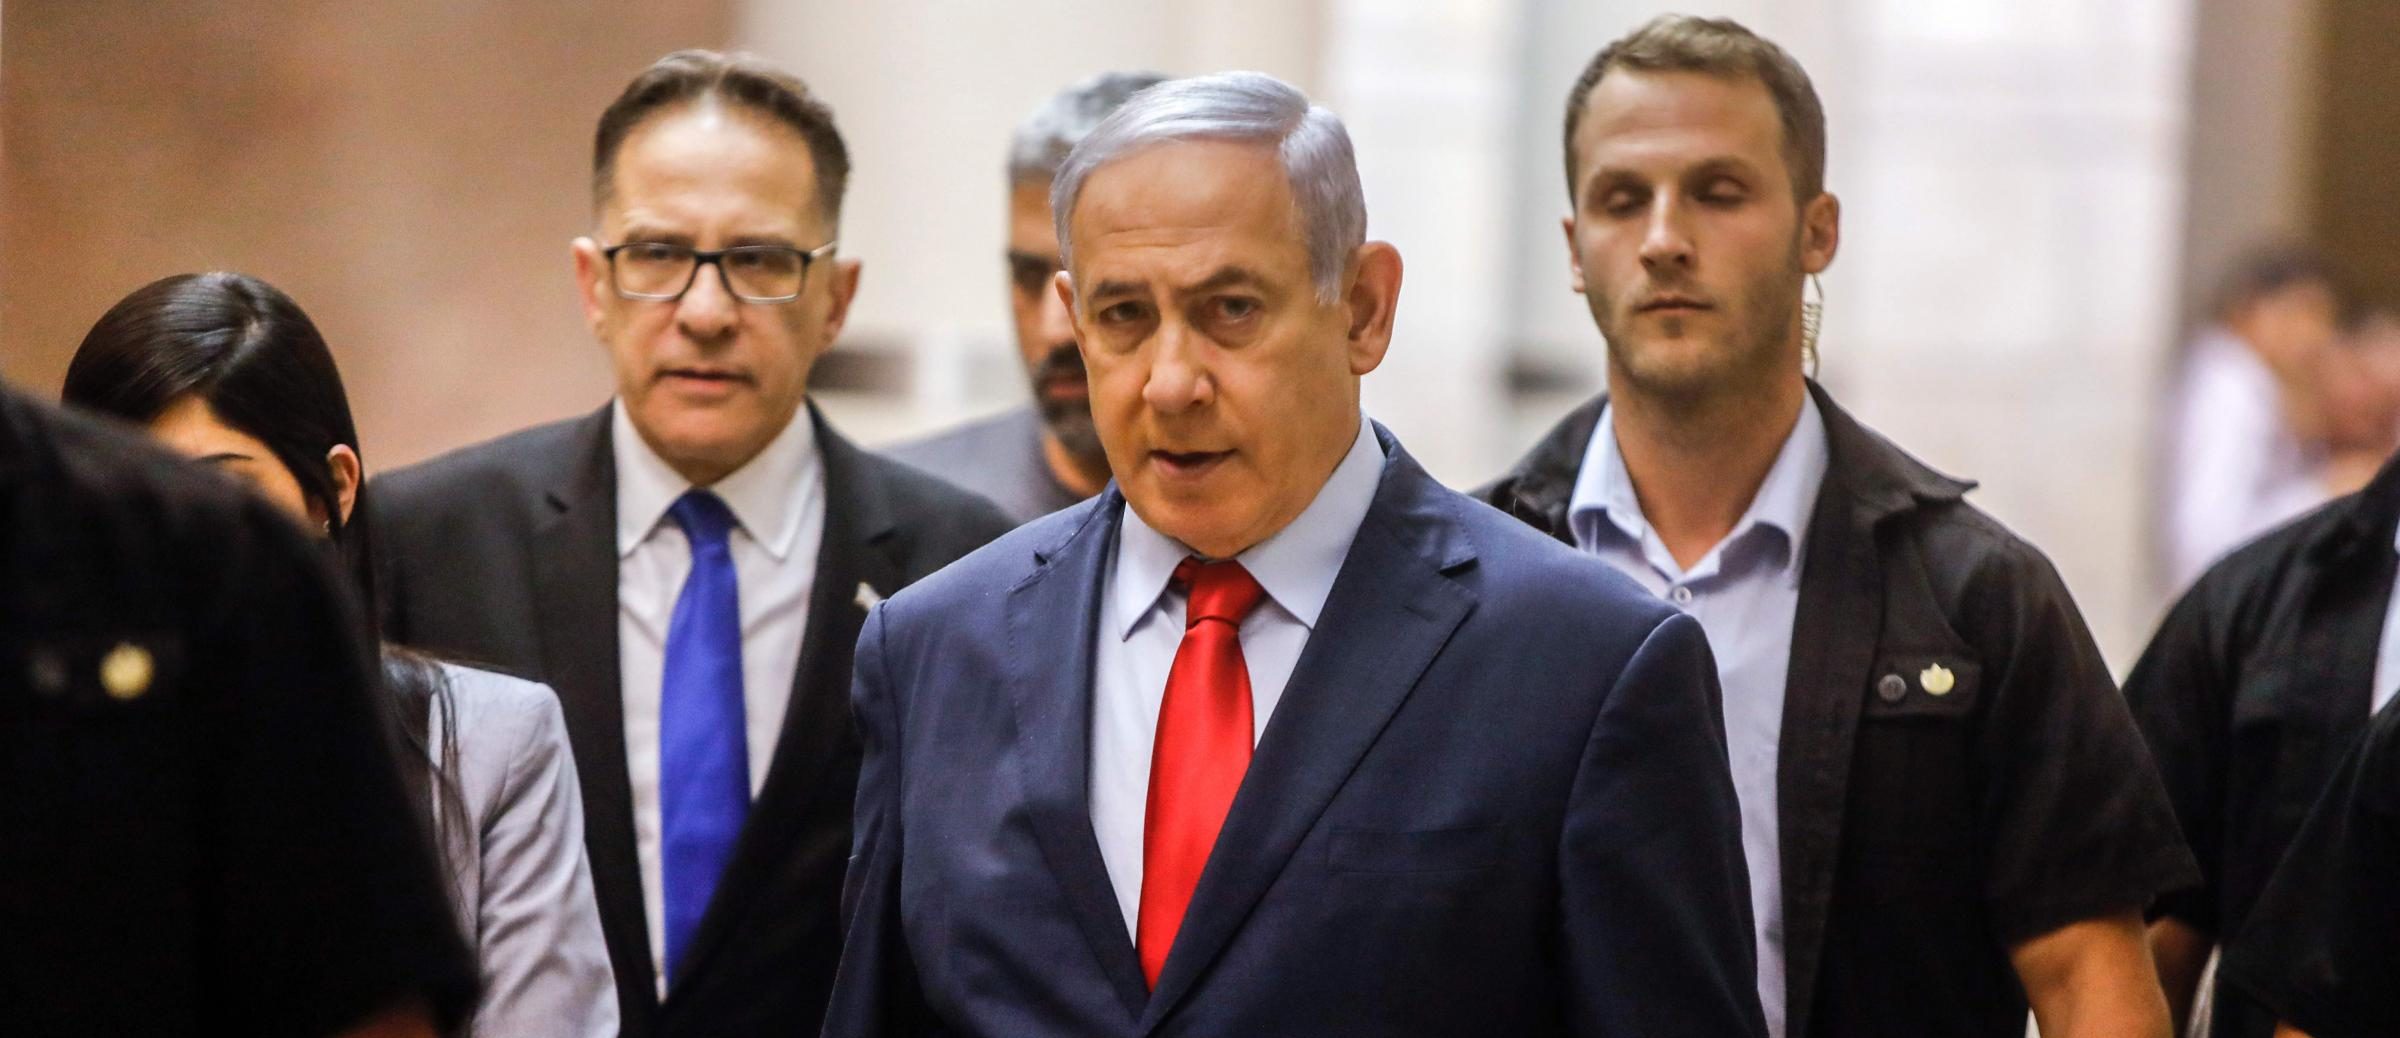 La guerra di Netanyahu che darà un vantaggio a Hamas